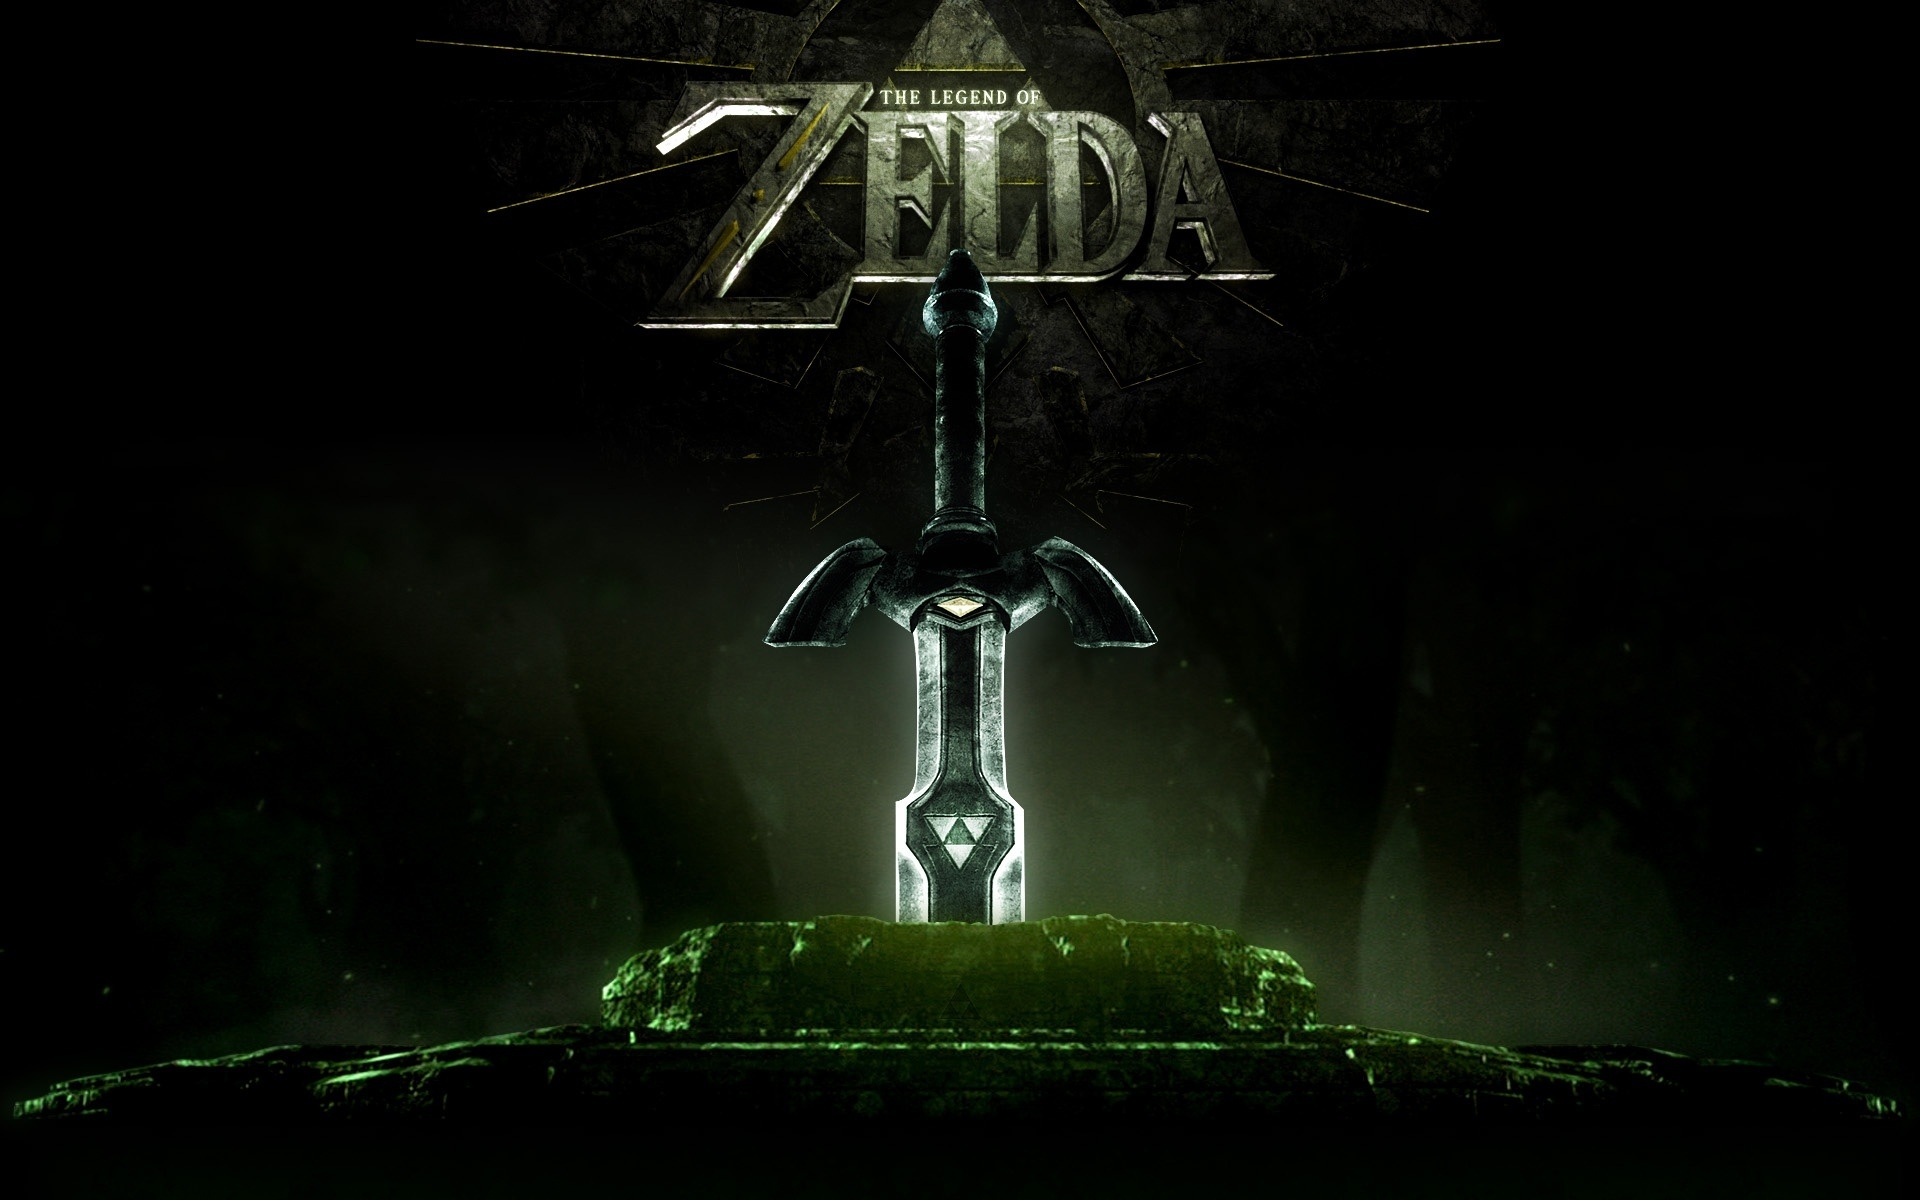 Legend of Zelda for 1920 x 1200 widescreen resolution